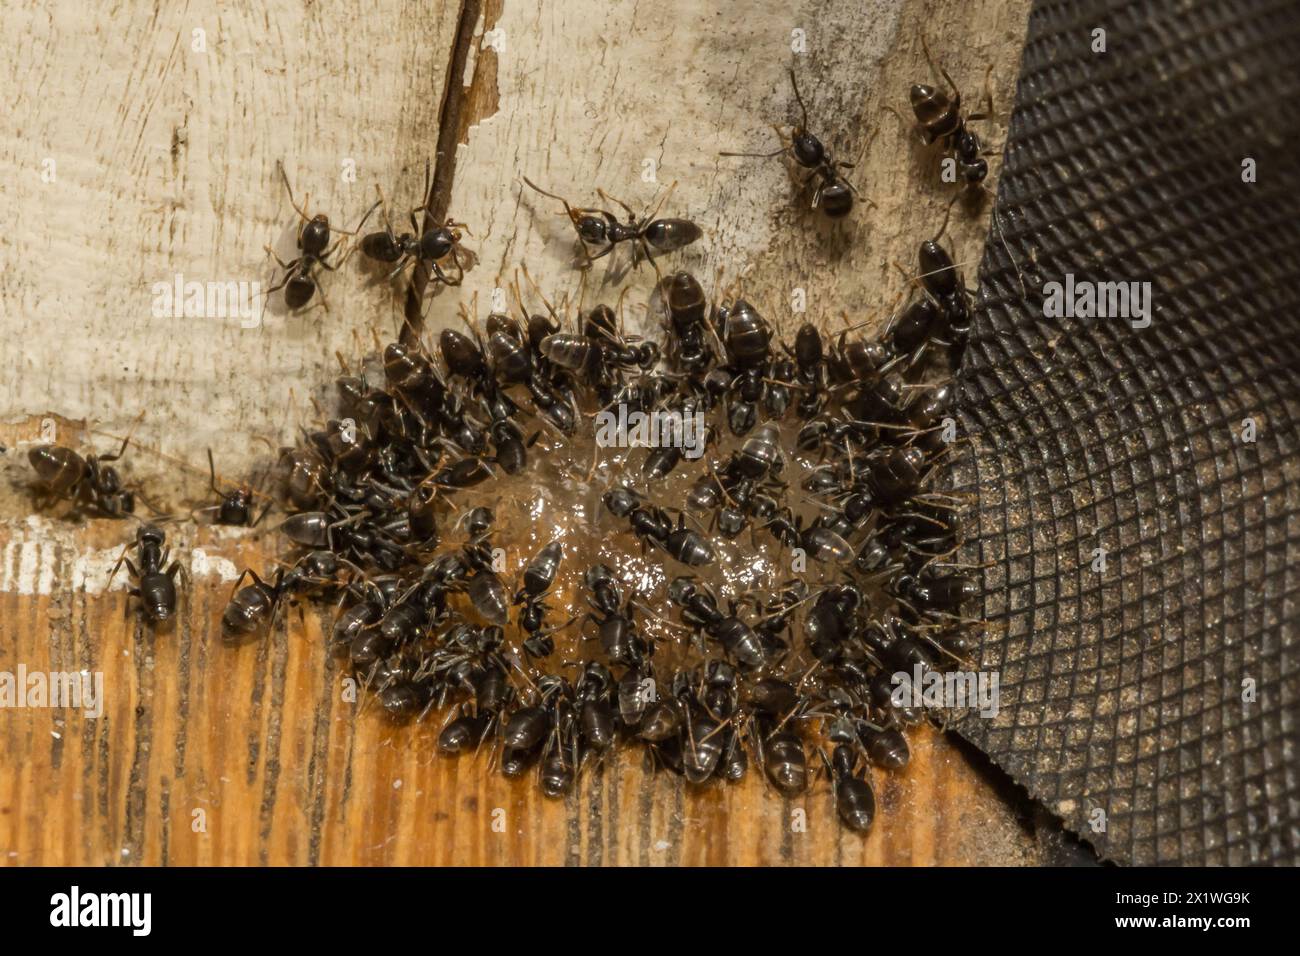 Odorous House Ants feeding on Ant Gel Bait Stock Photo